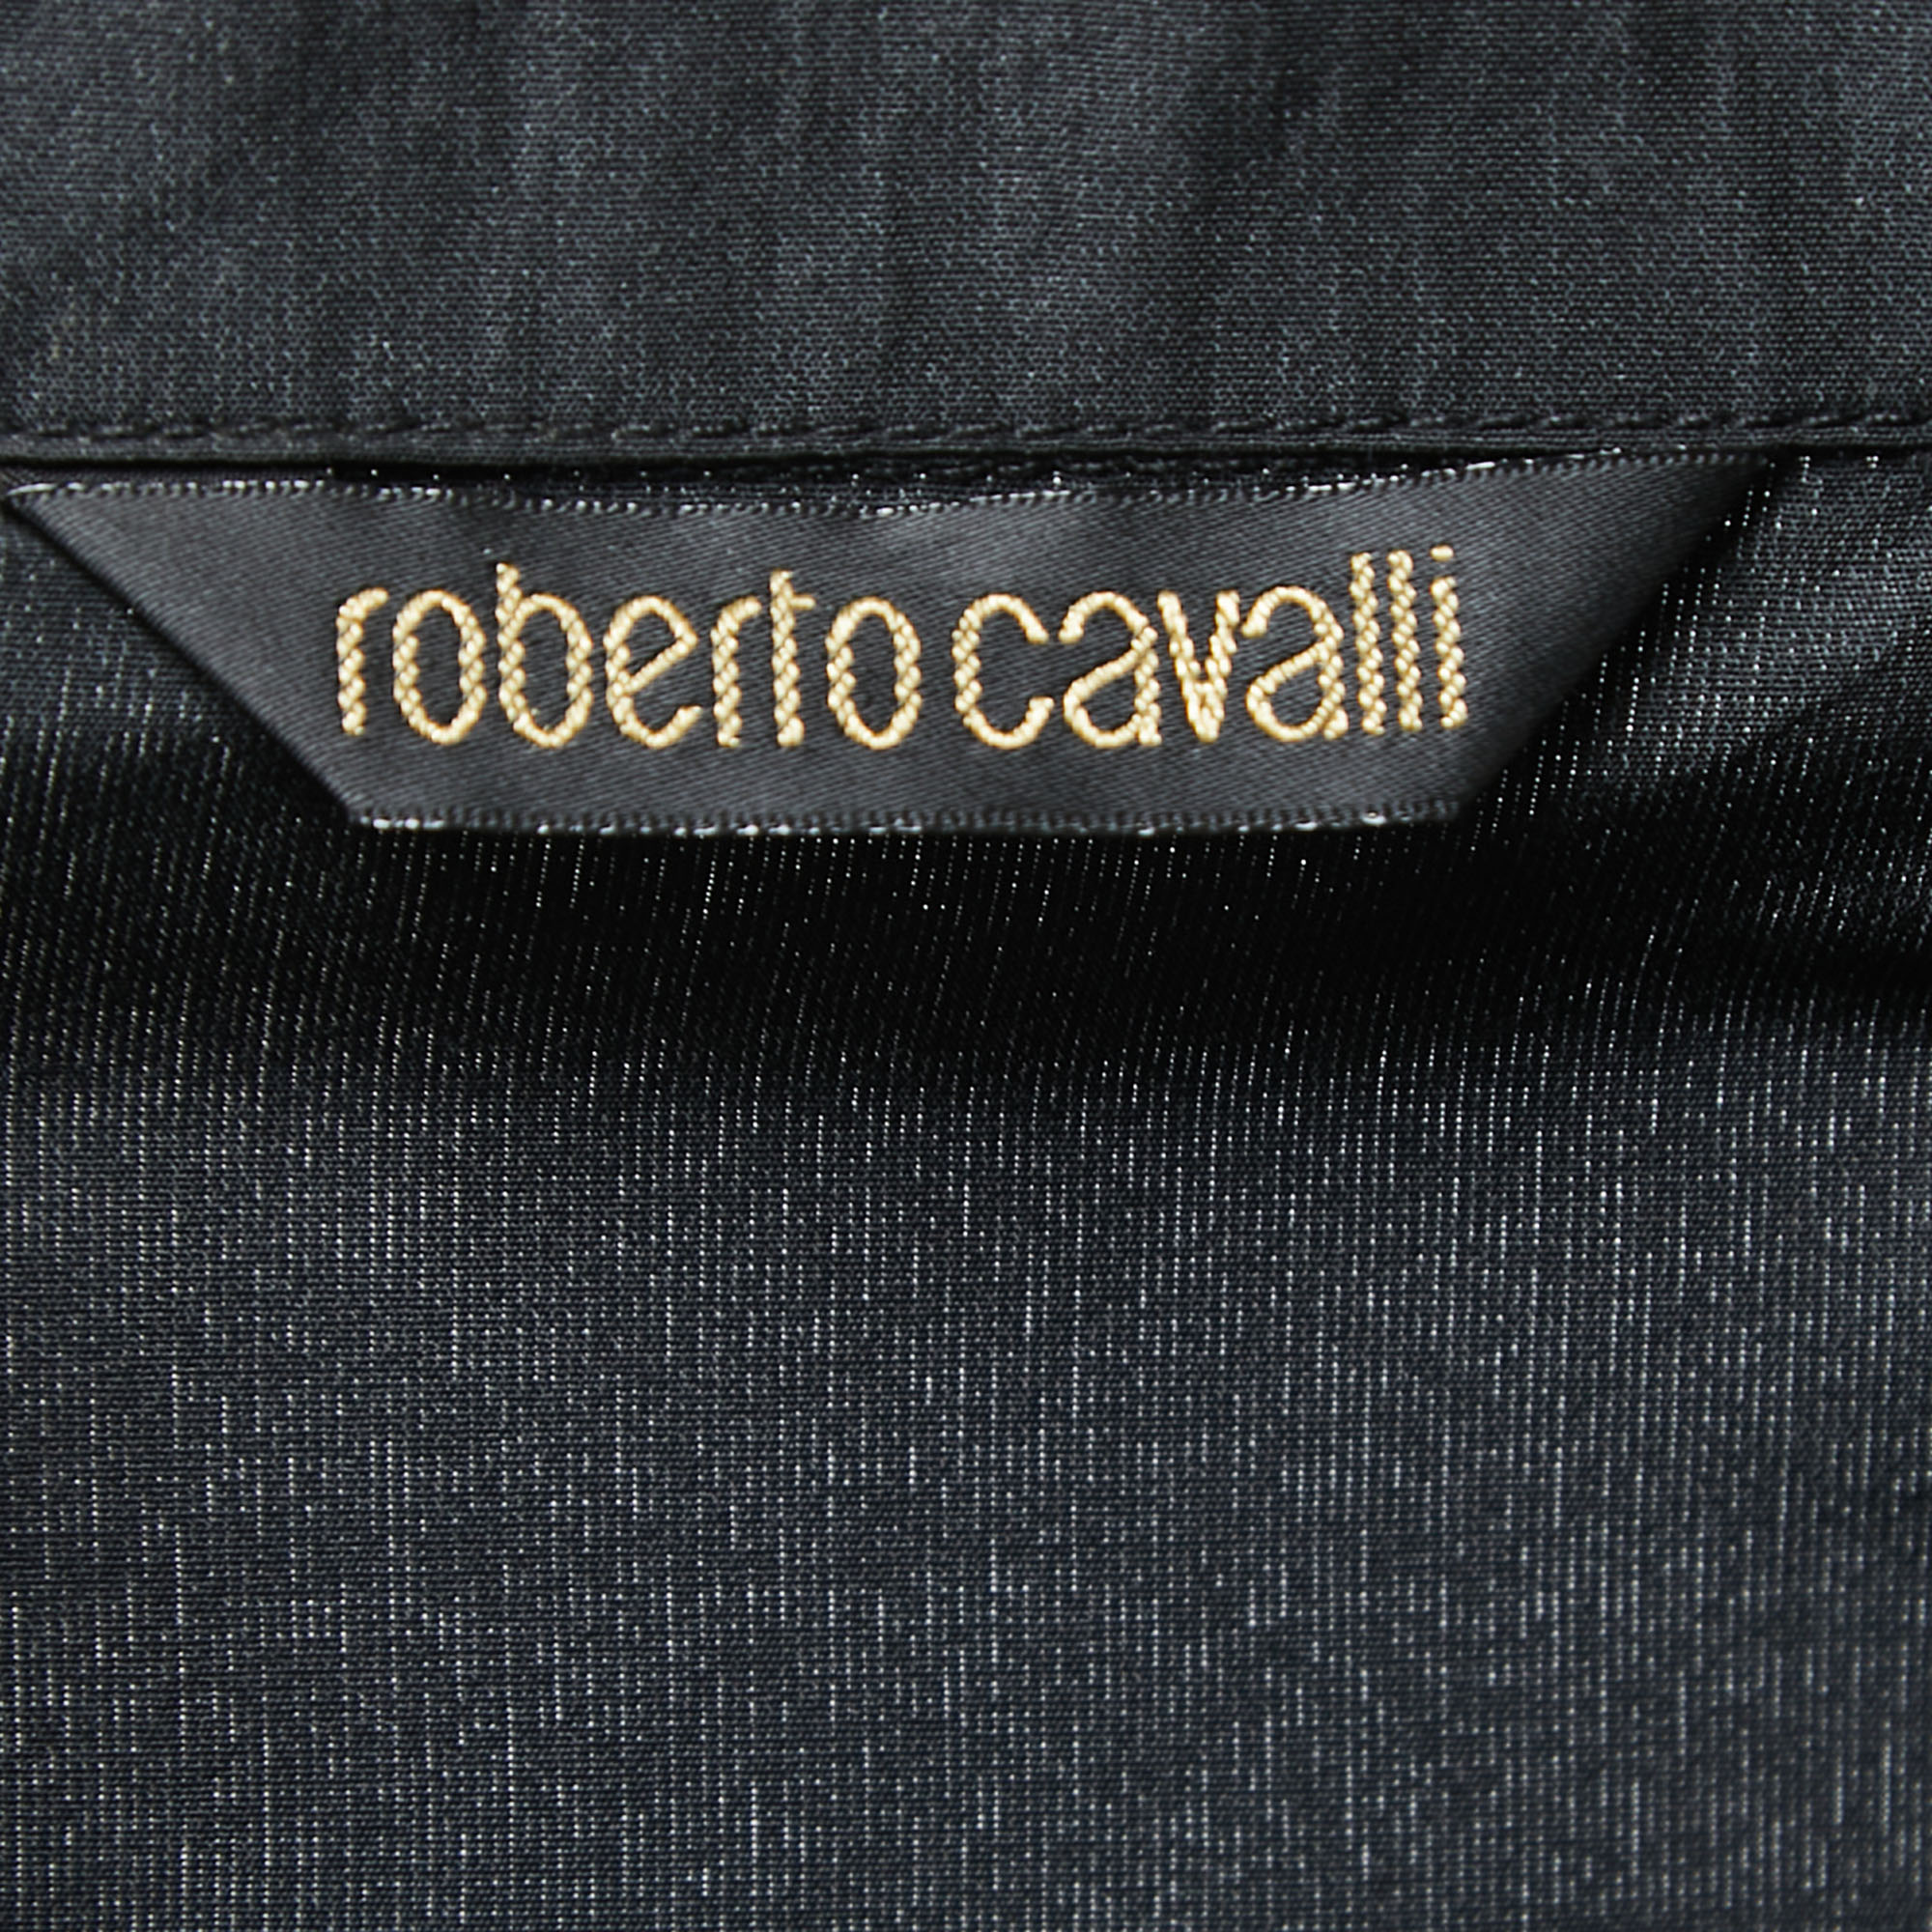 Roberto Cavalli Black Taffeta Ruffled Shirt M